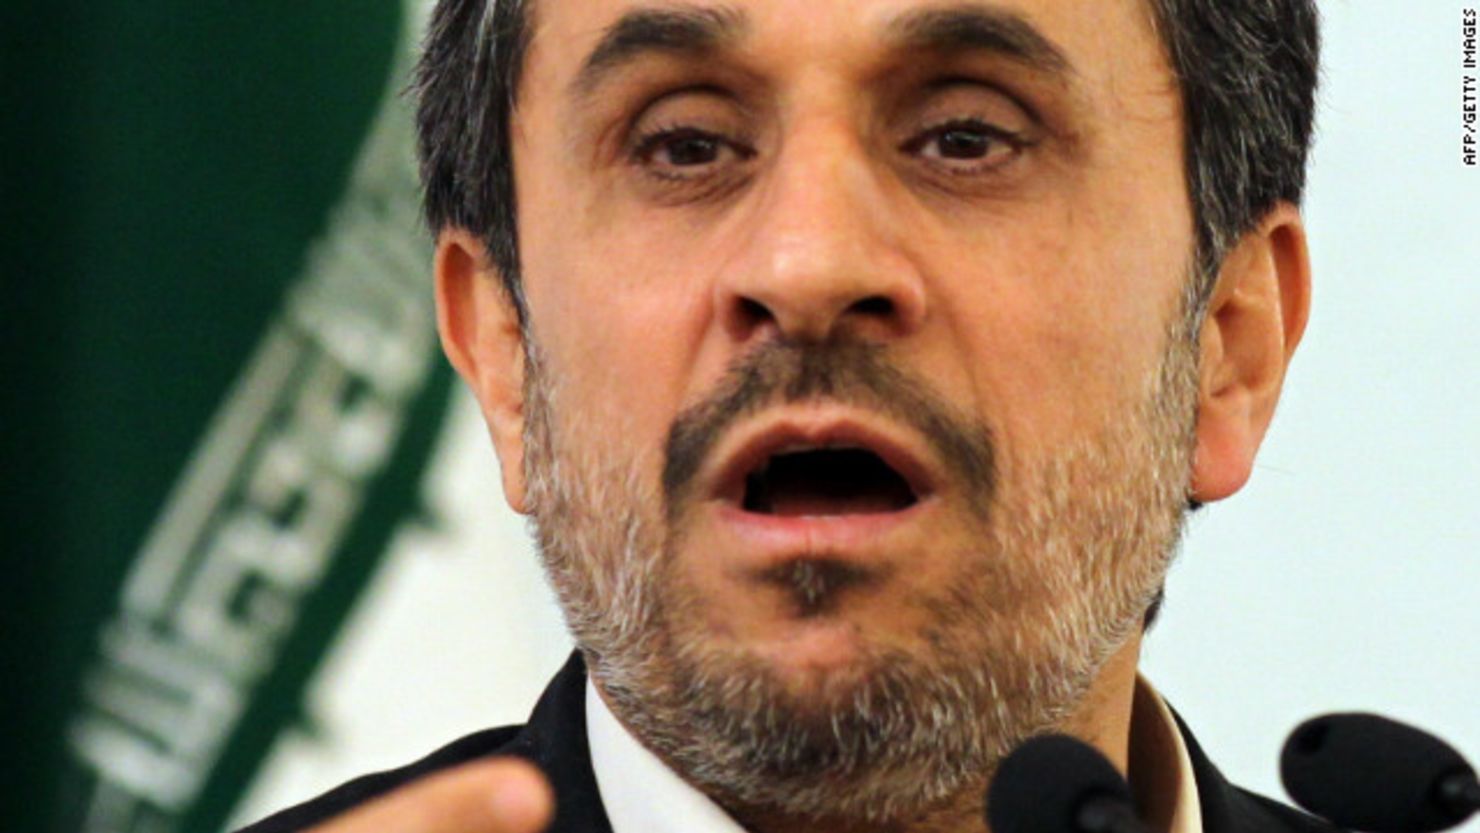 CNNE e9977e7e - 120211121143-iranian-president-mahmoud-ahmadinejad-story-top